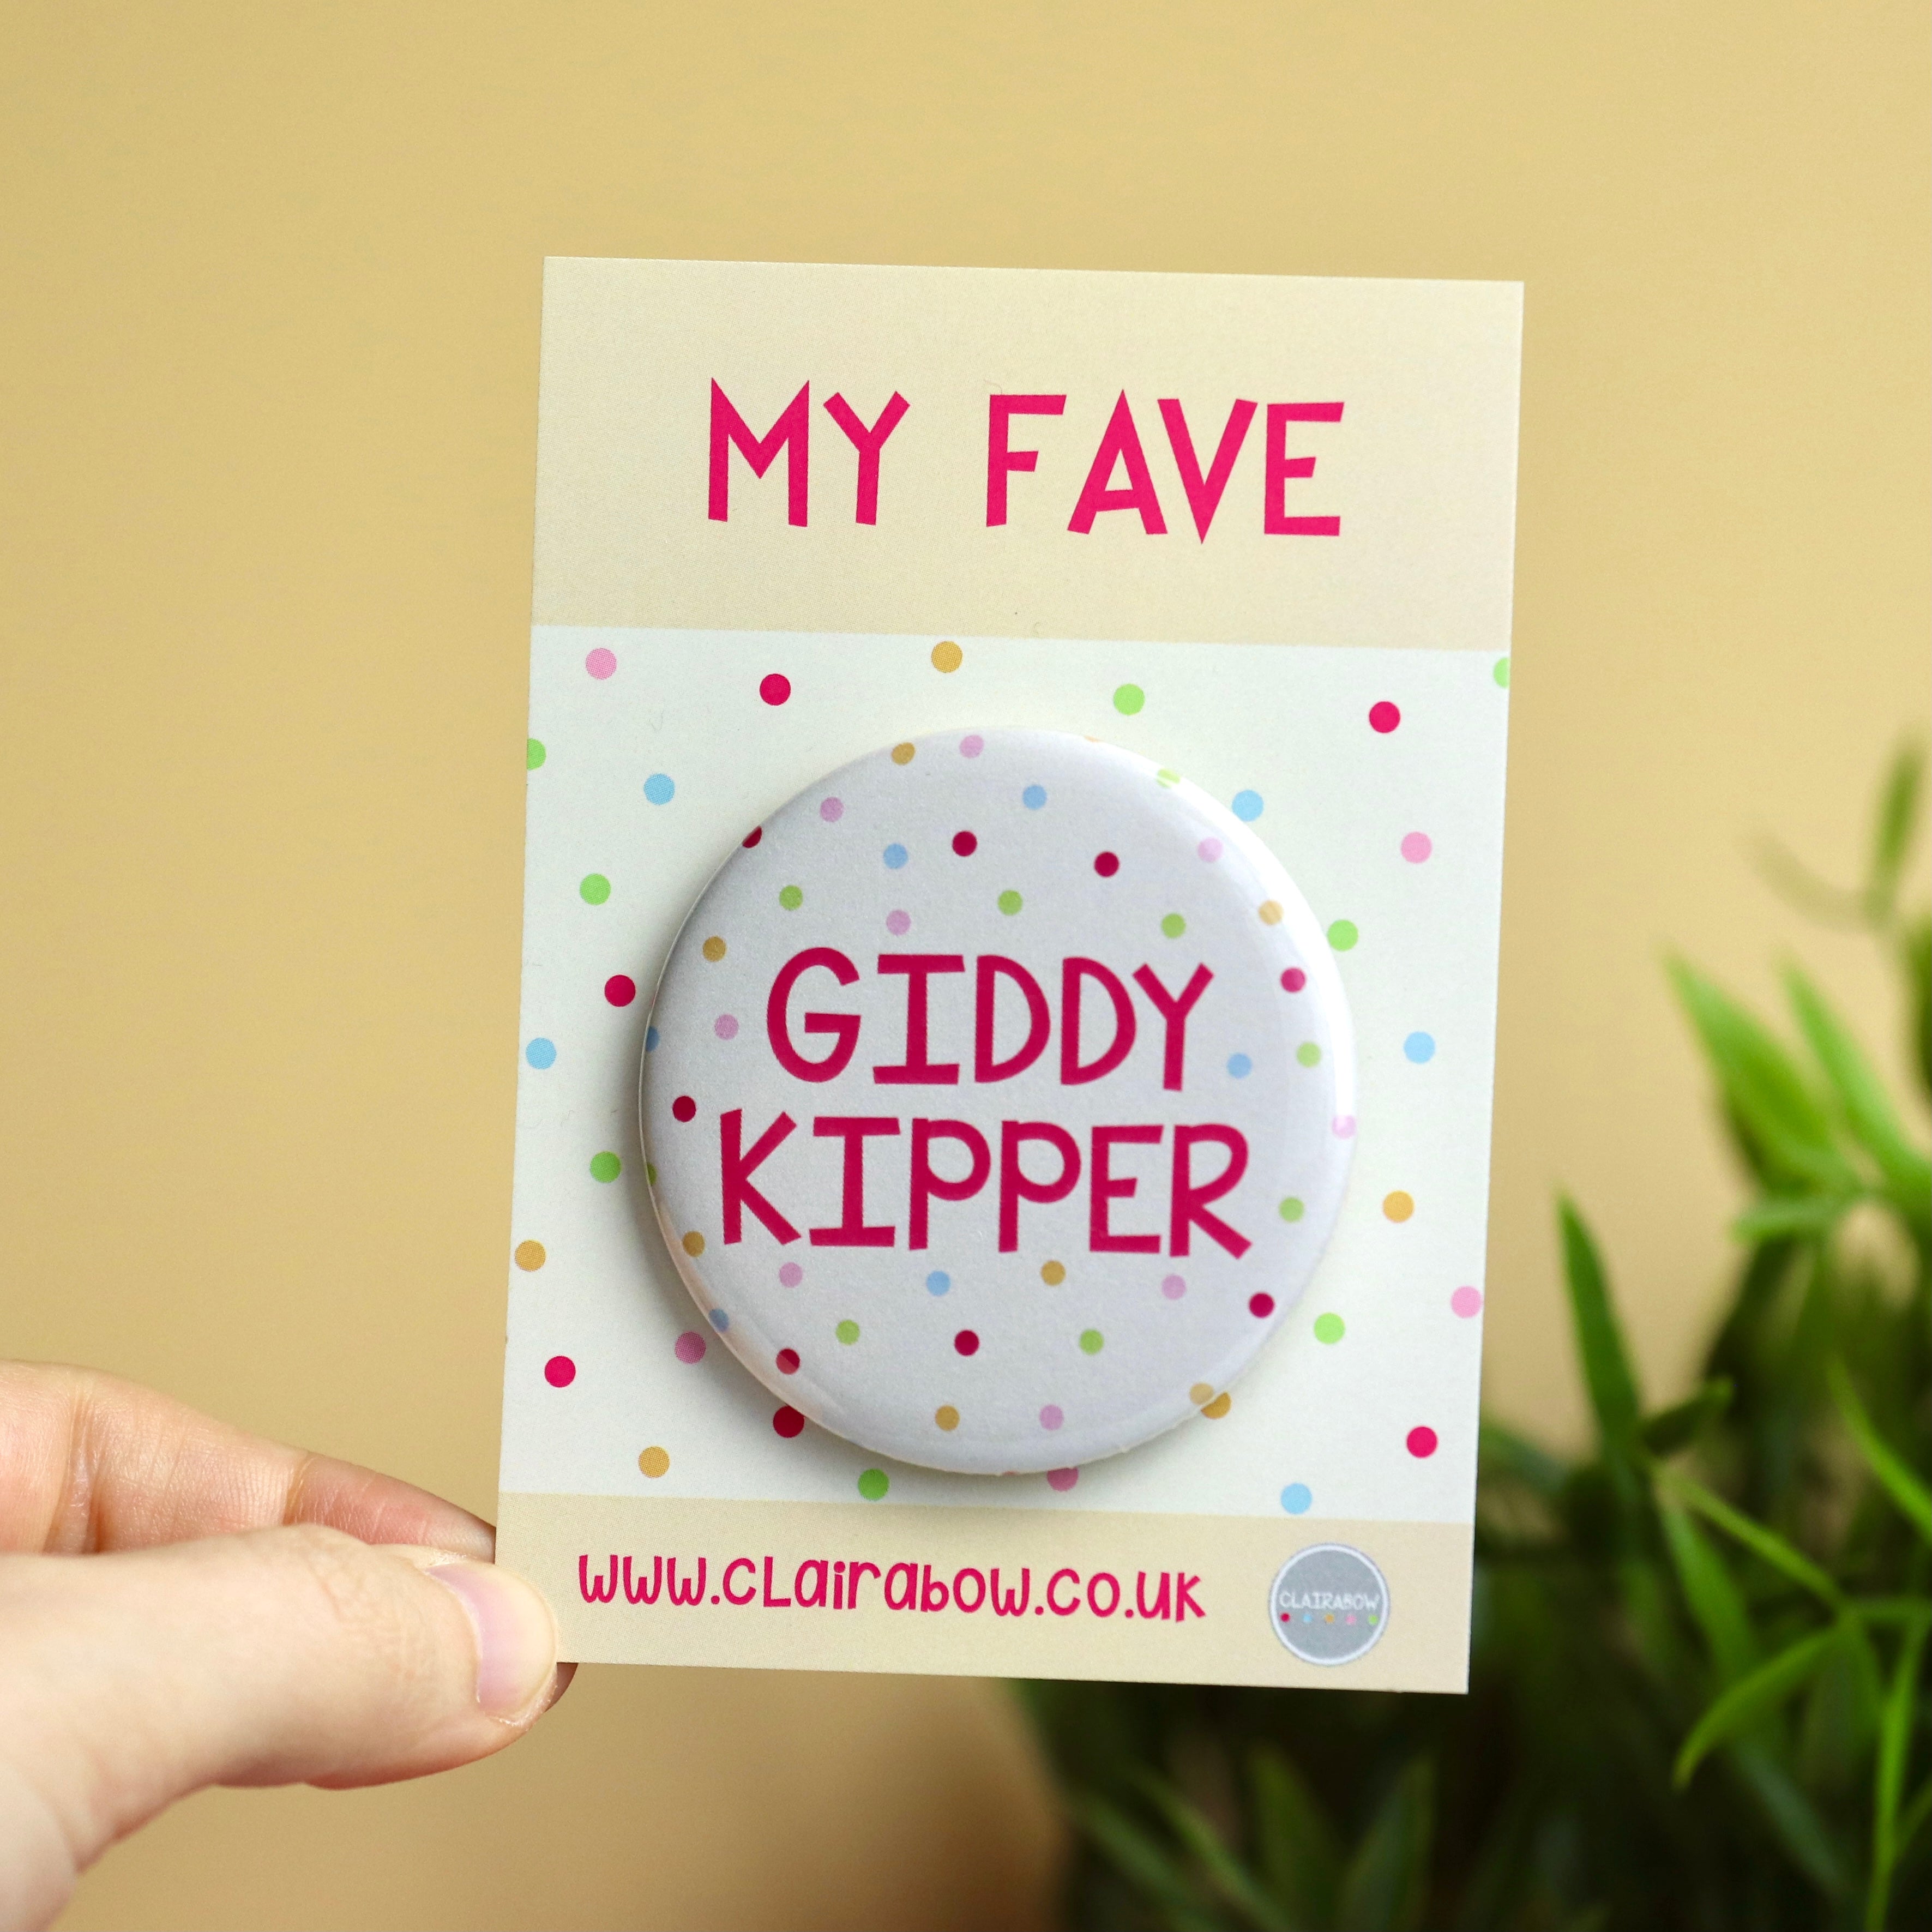 My Fave Giddy Kipper Badge